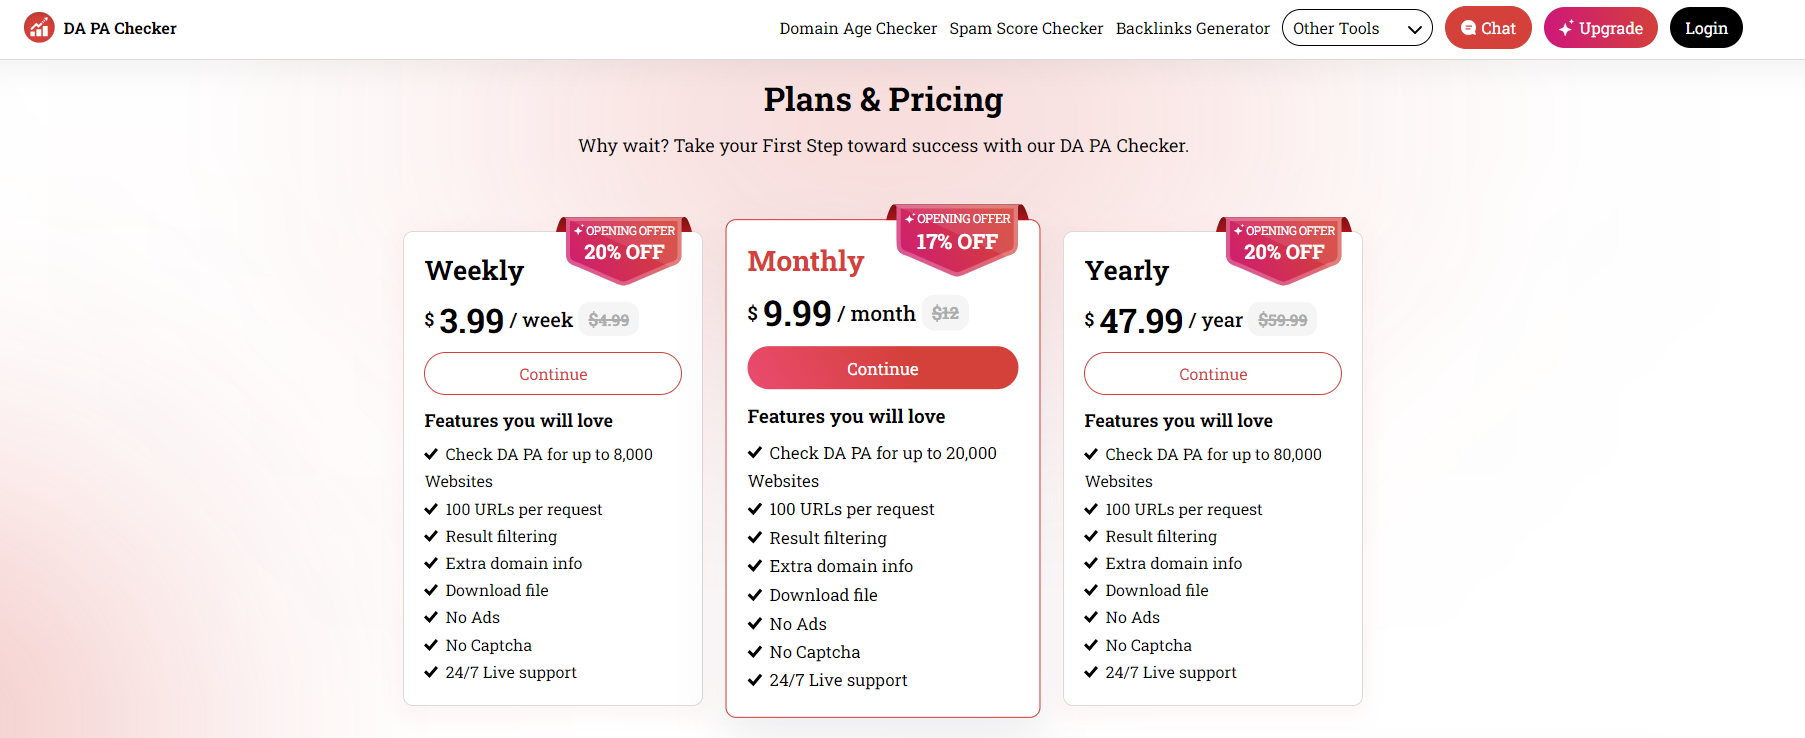 DA PA Checker pricing details